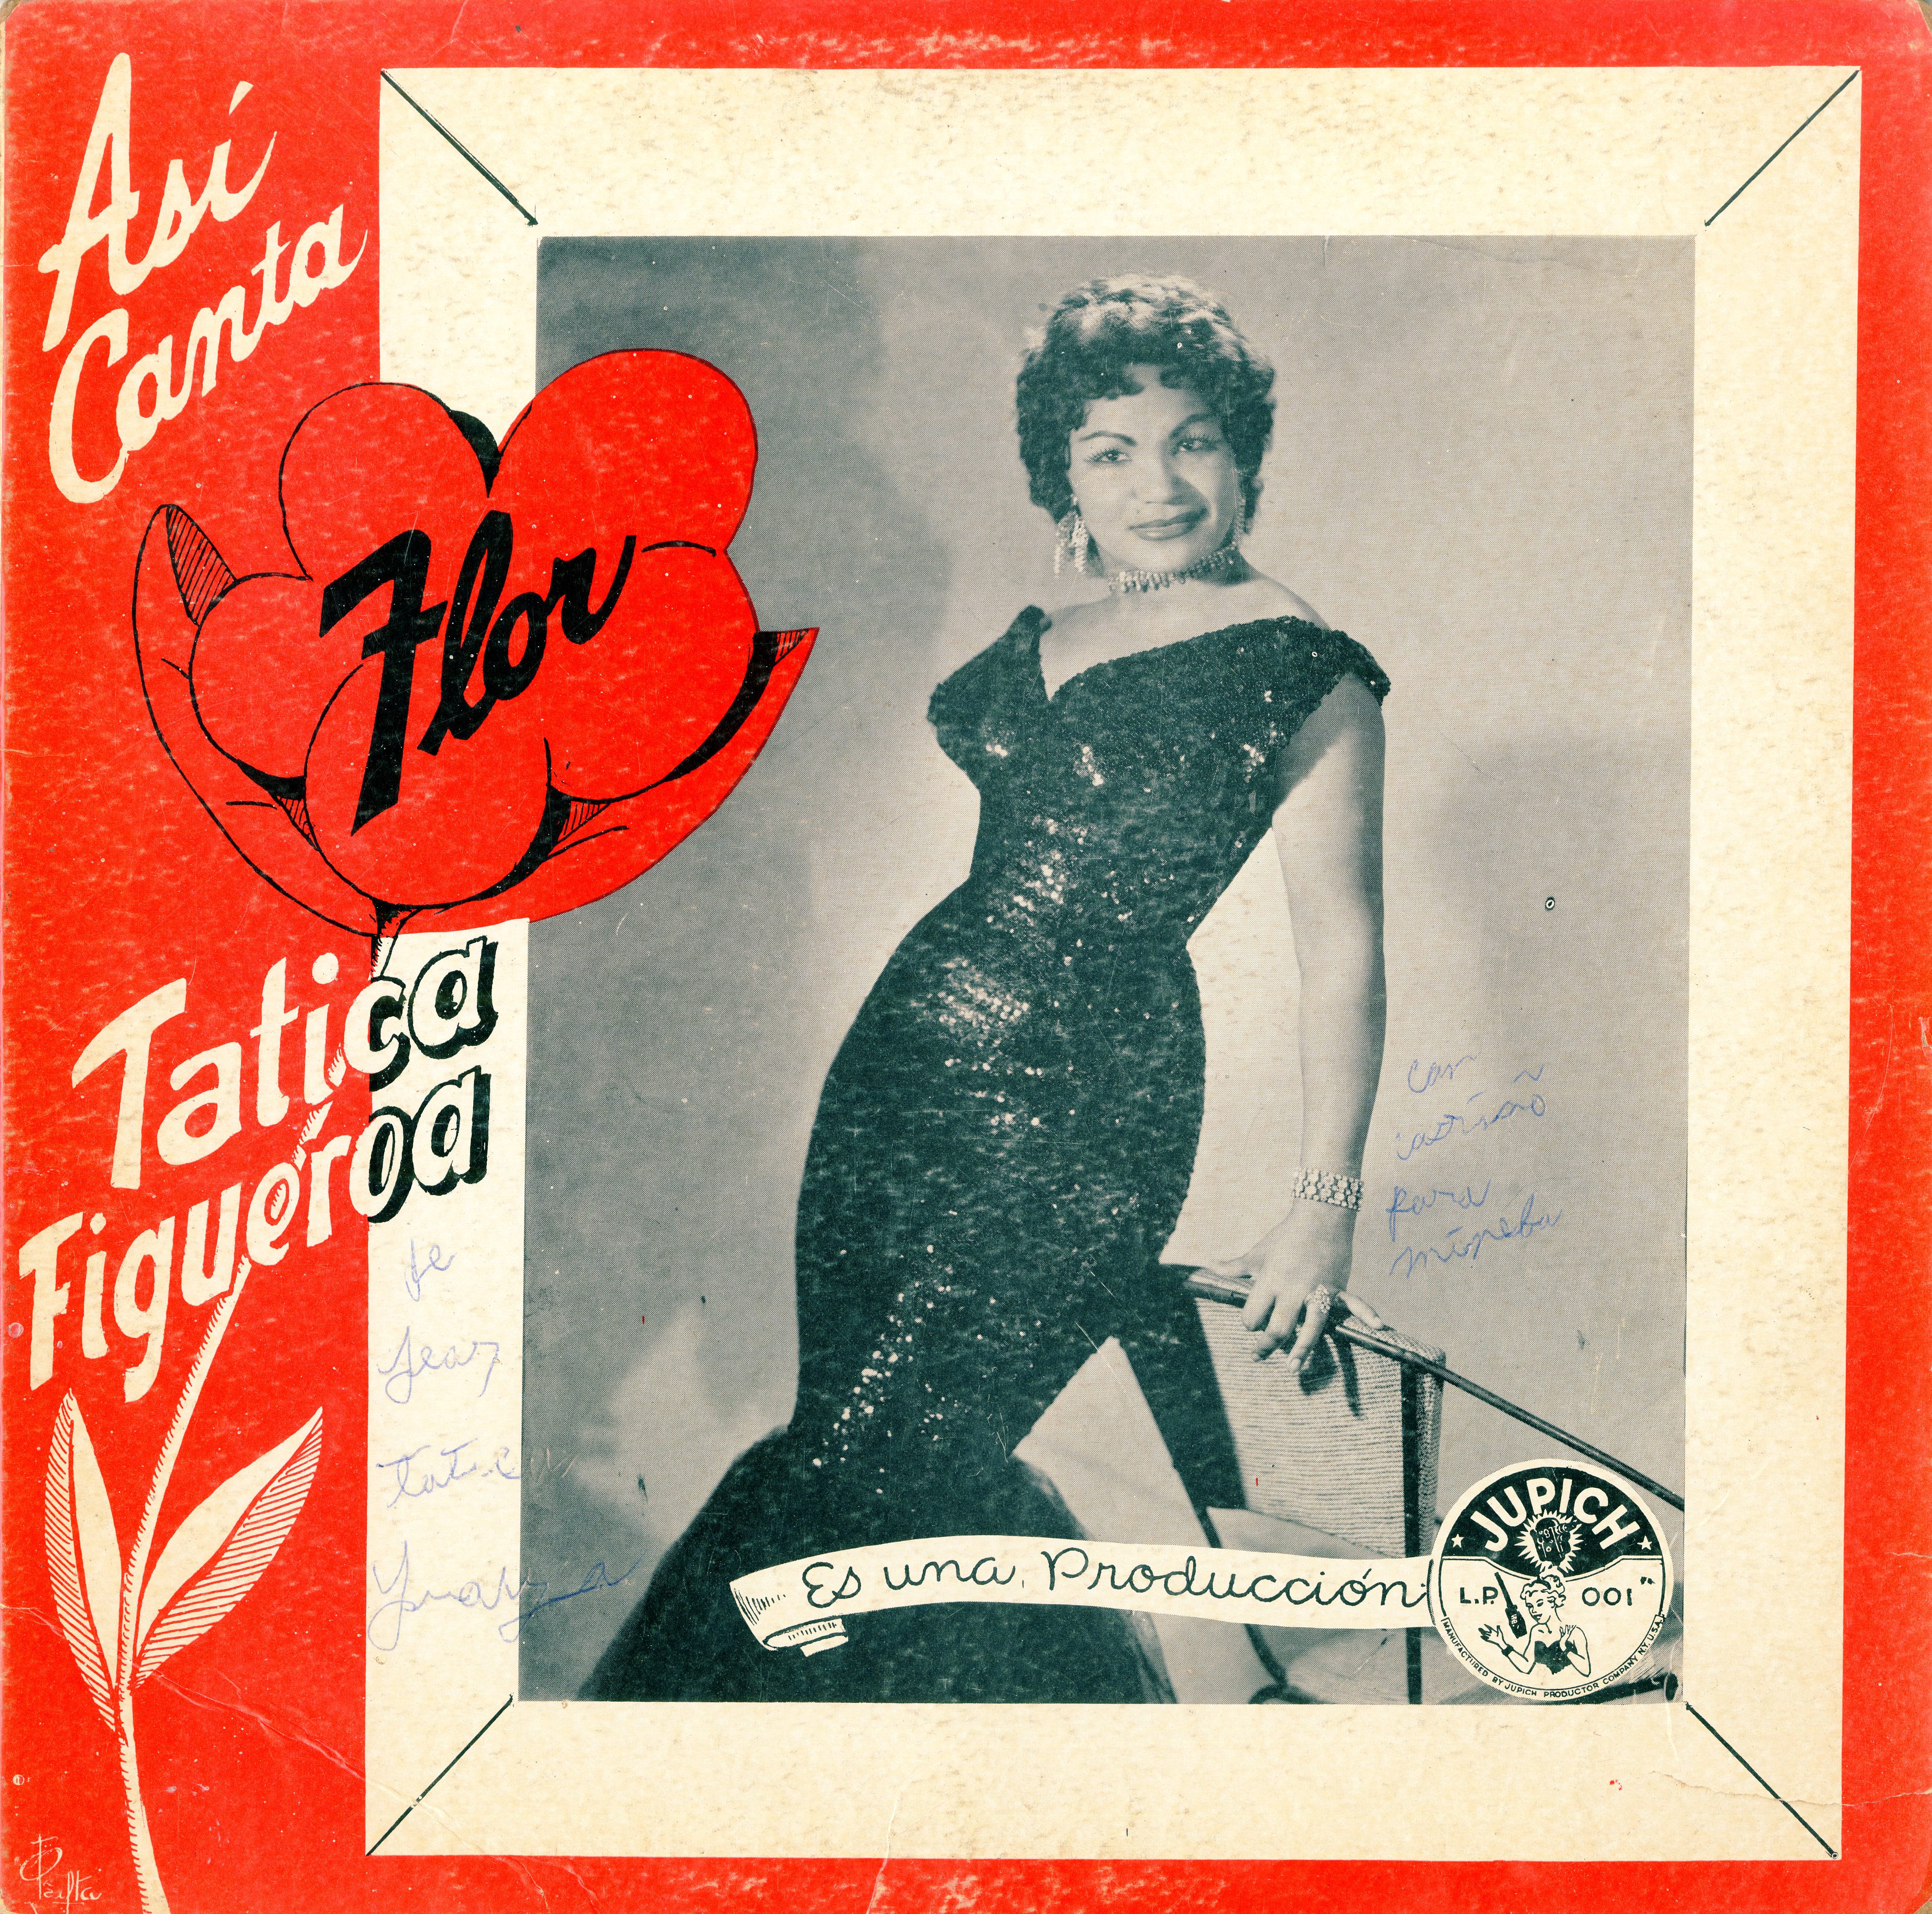 Así Canta Flor Tatica Figueroa, LP Album Cover, ca. 1960s